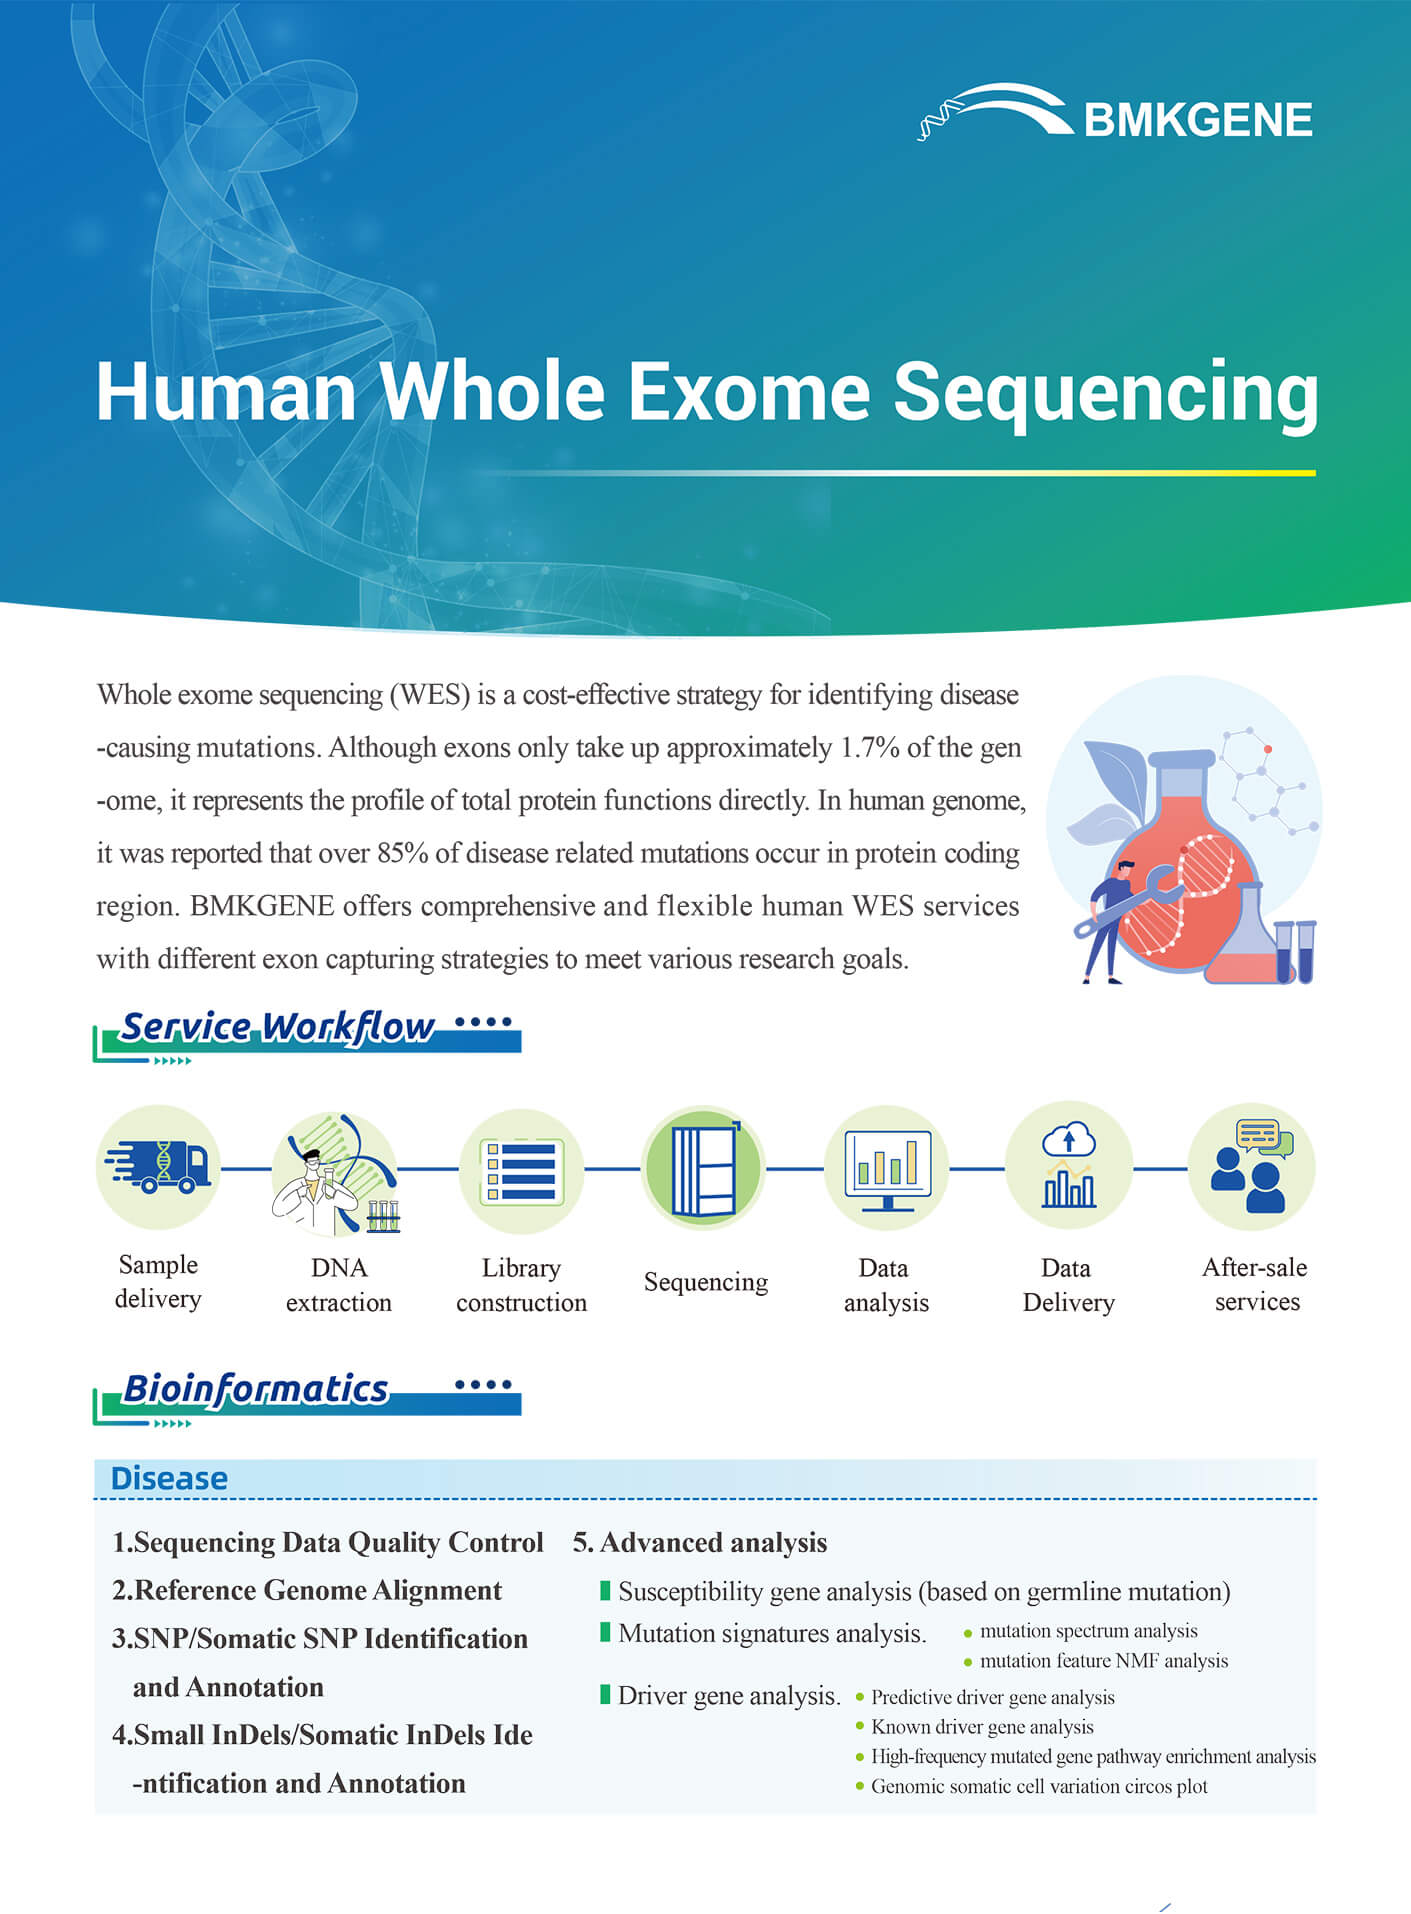 https://www.bmkgene.com/uploads/Human-Whole-Exome-Sequencing-hWES-BMKGENE-2311.pdf